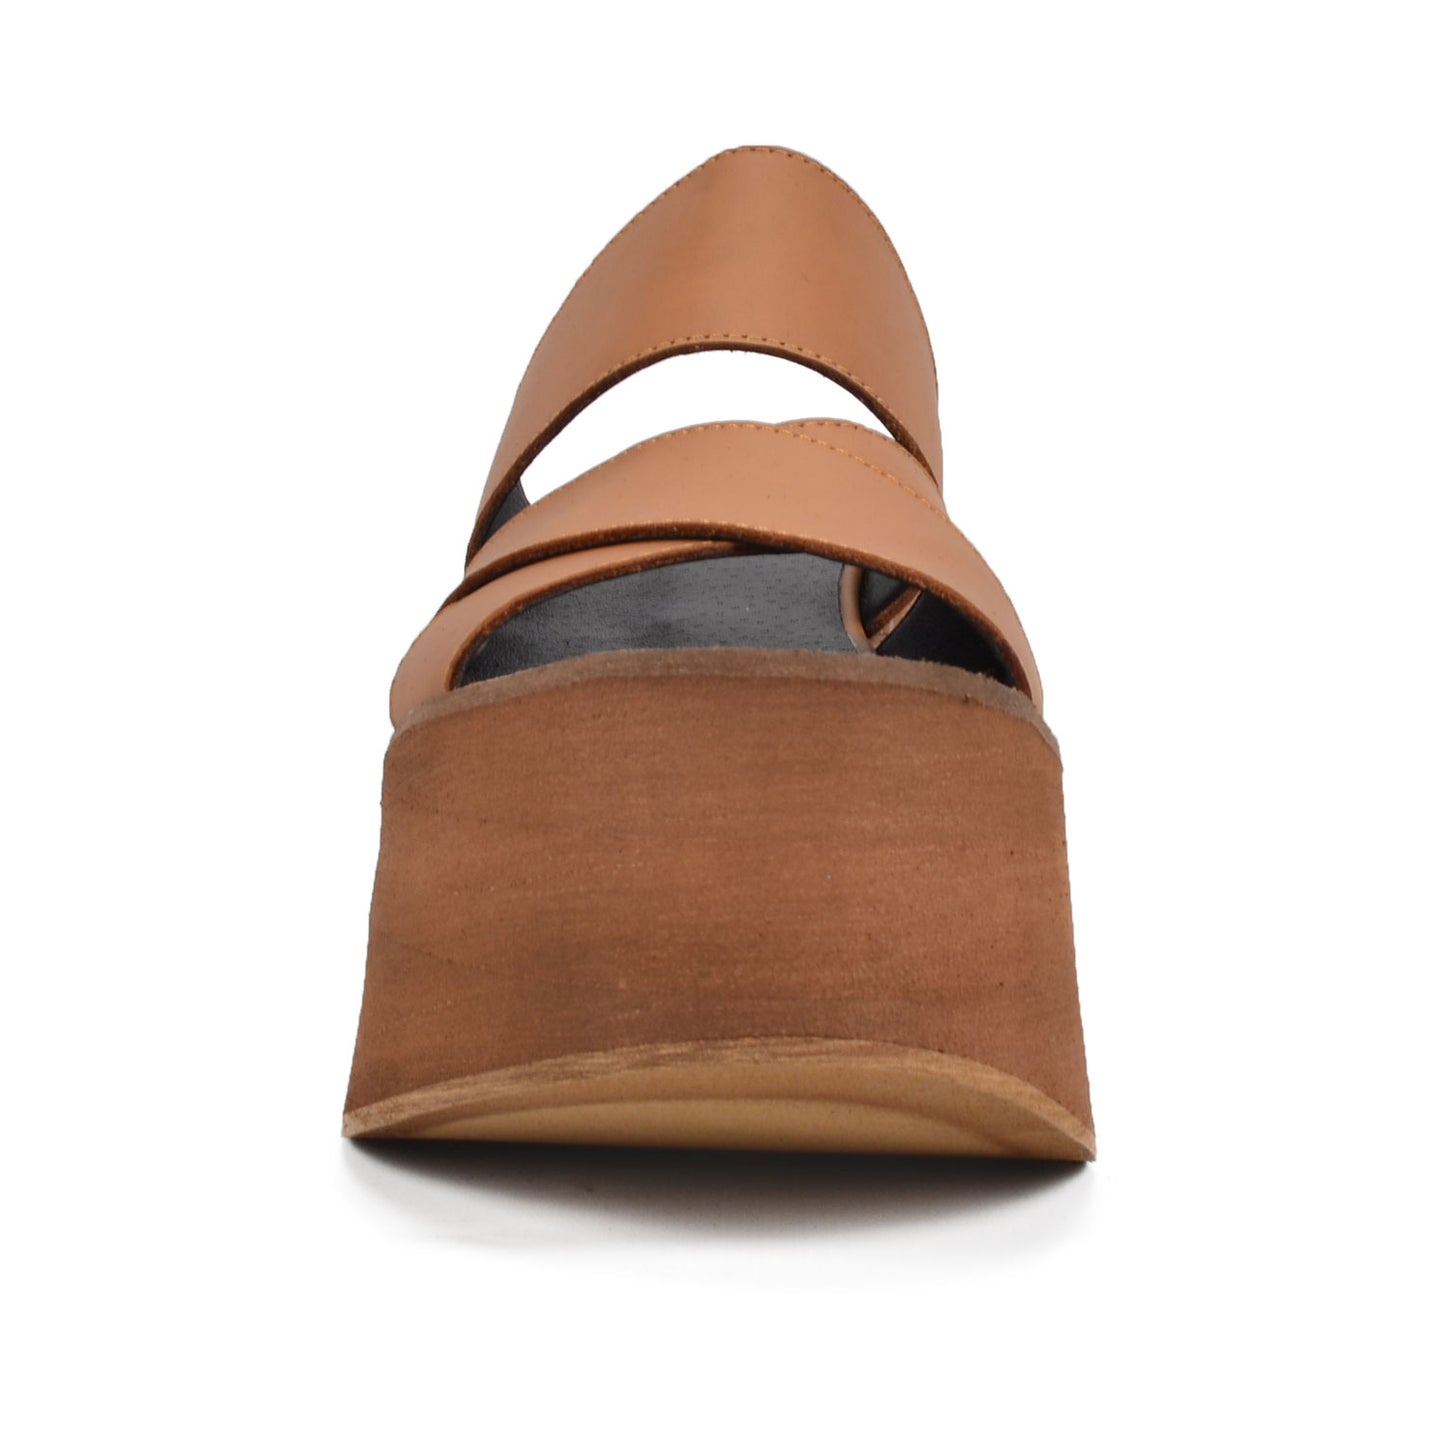 Congo Tan | Leather Slide Platform Sandals